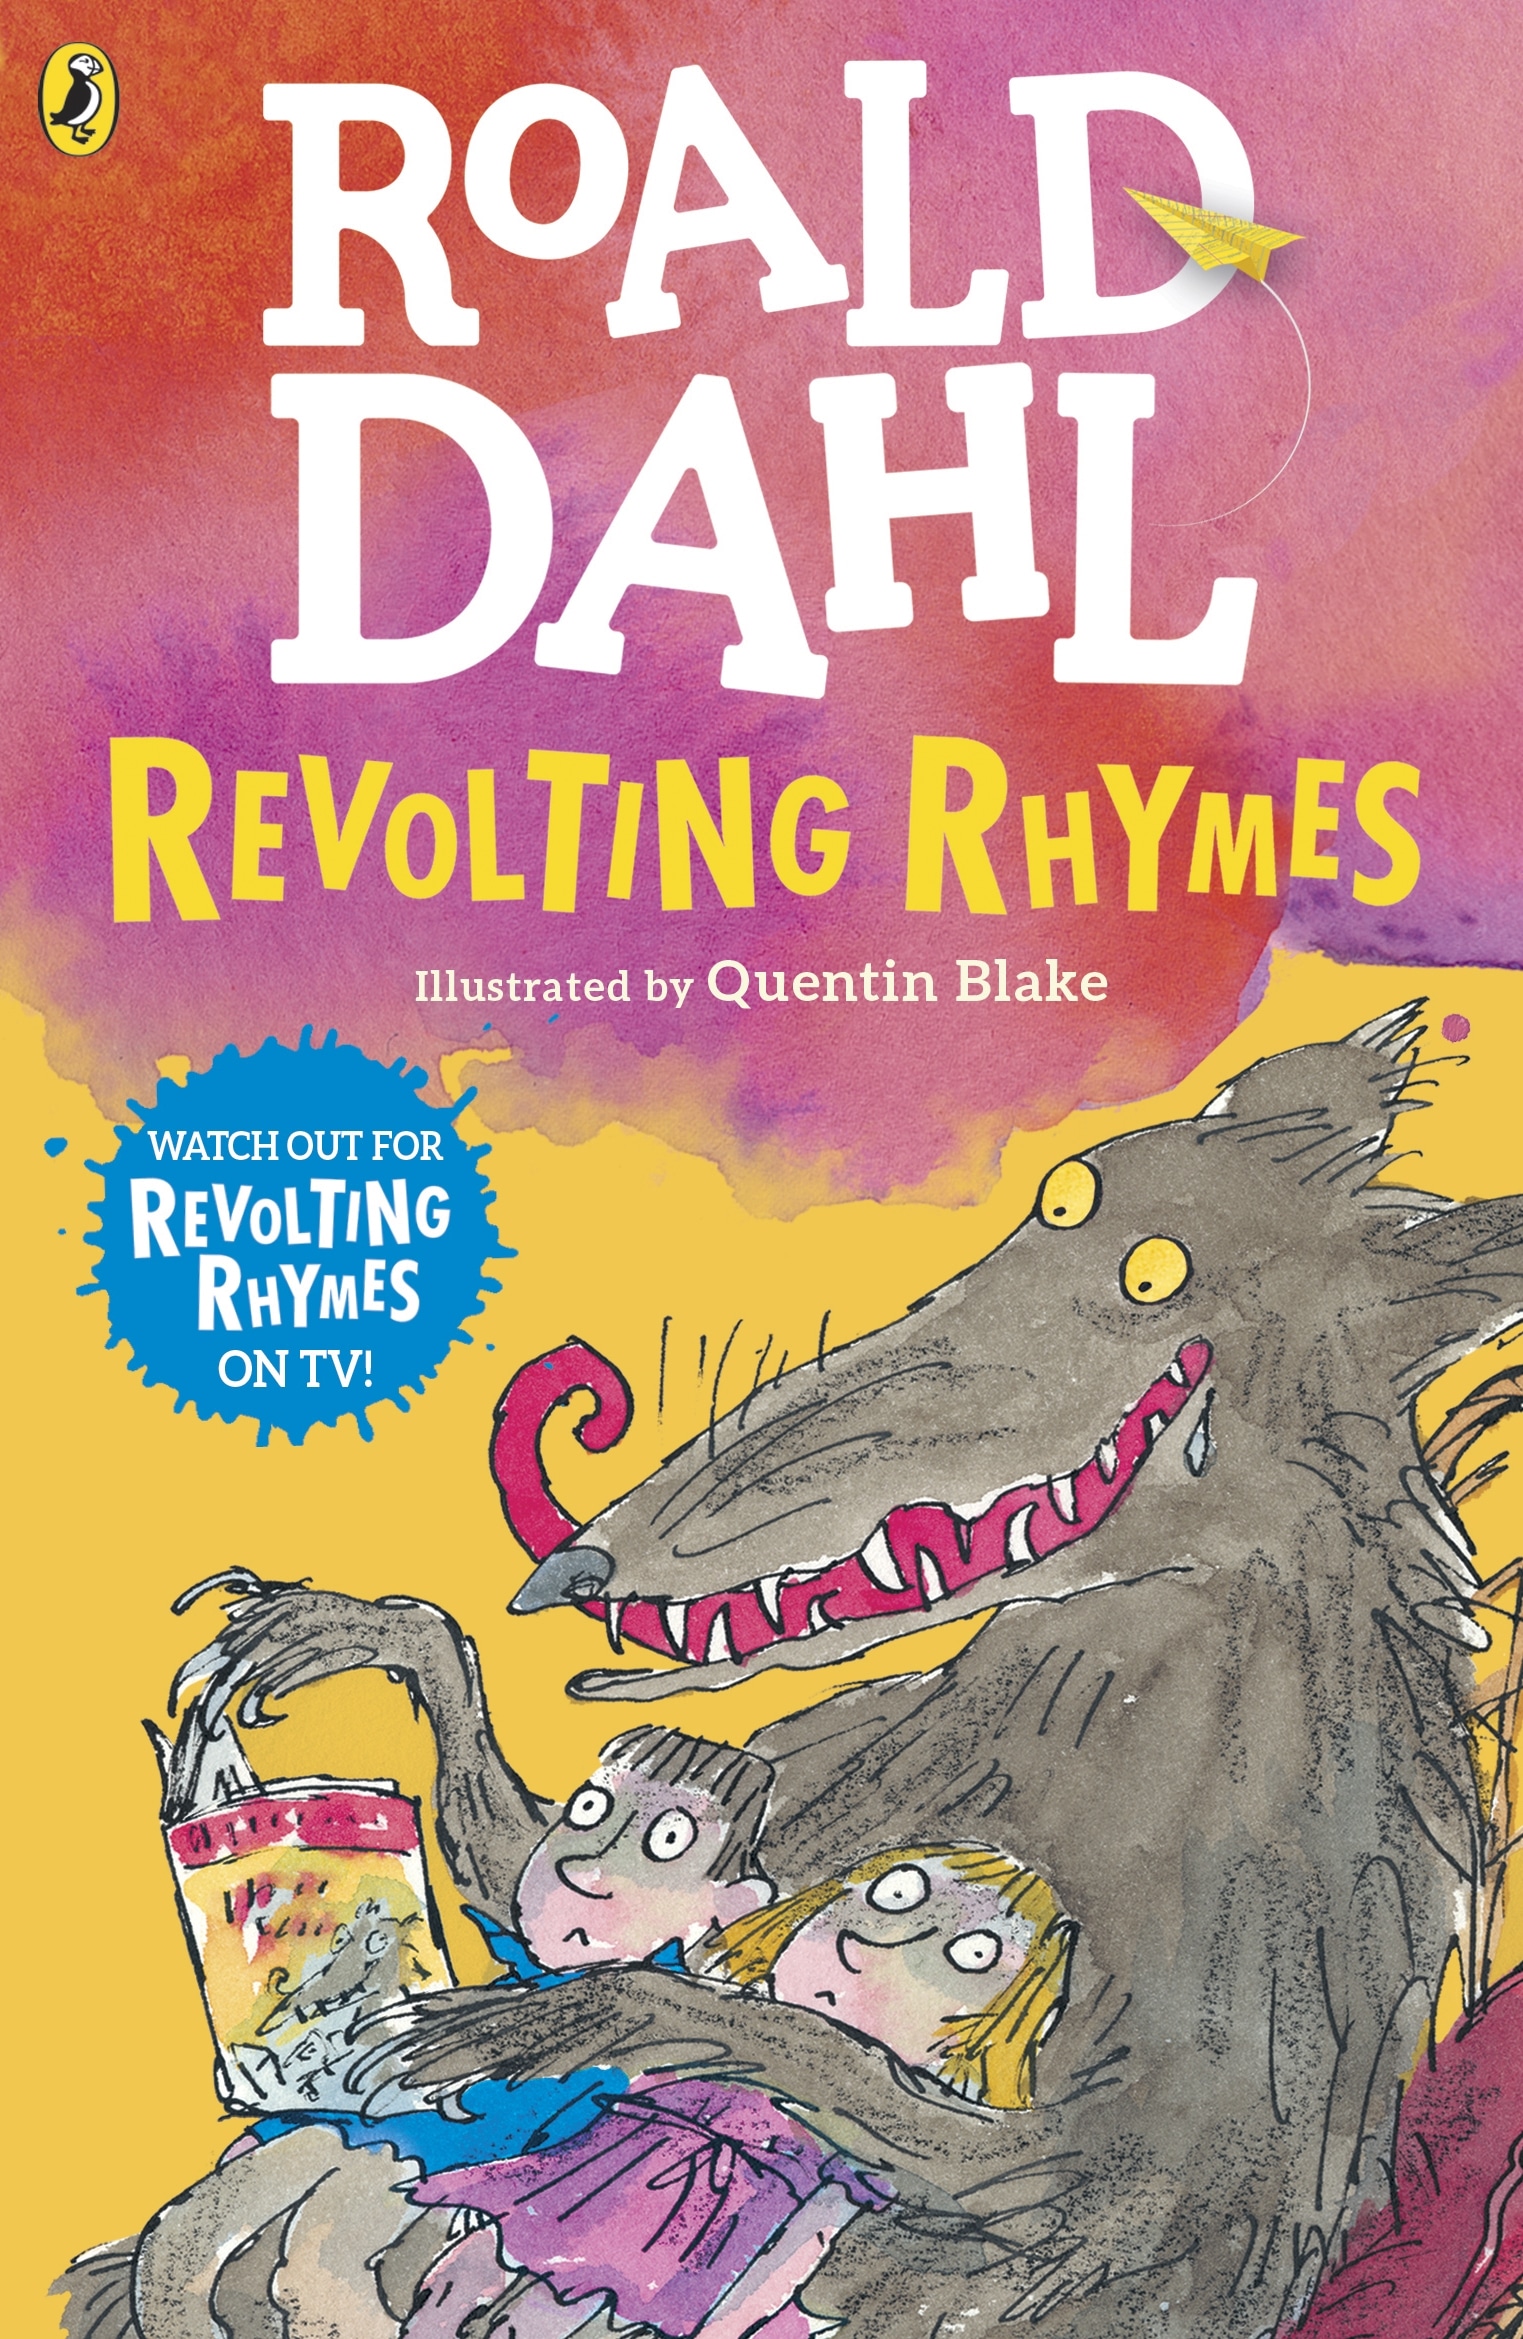 Book “Revolting Rhymes” by Roald Dahl — September 1, 2016